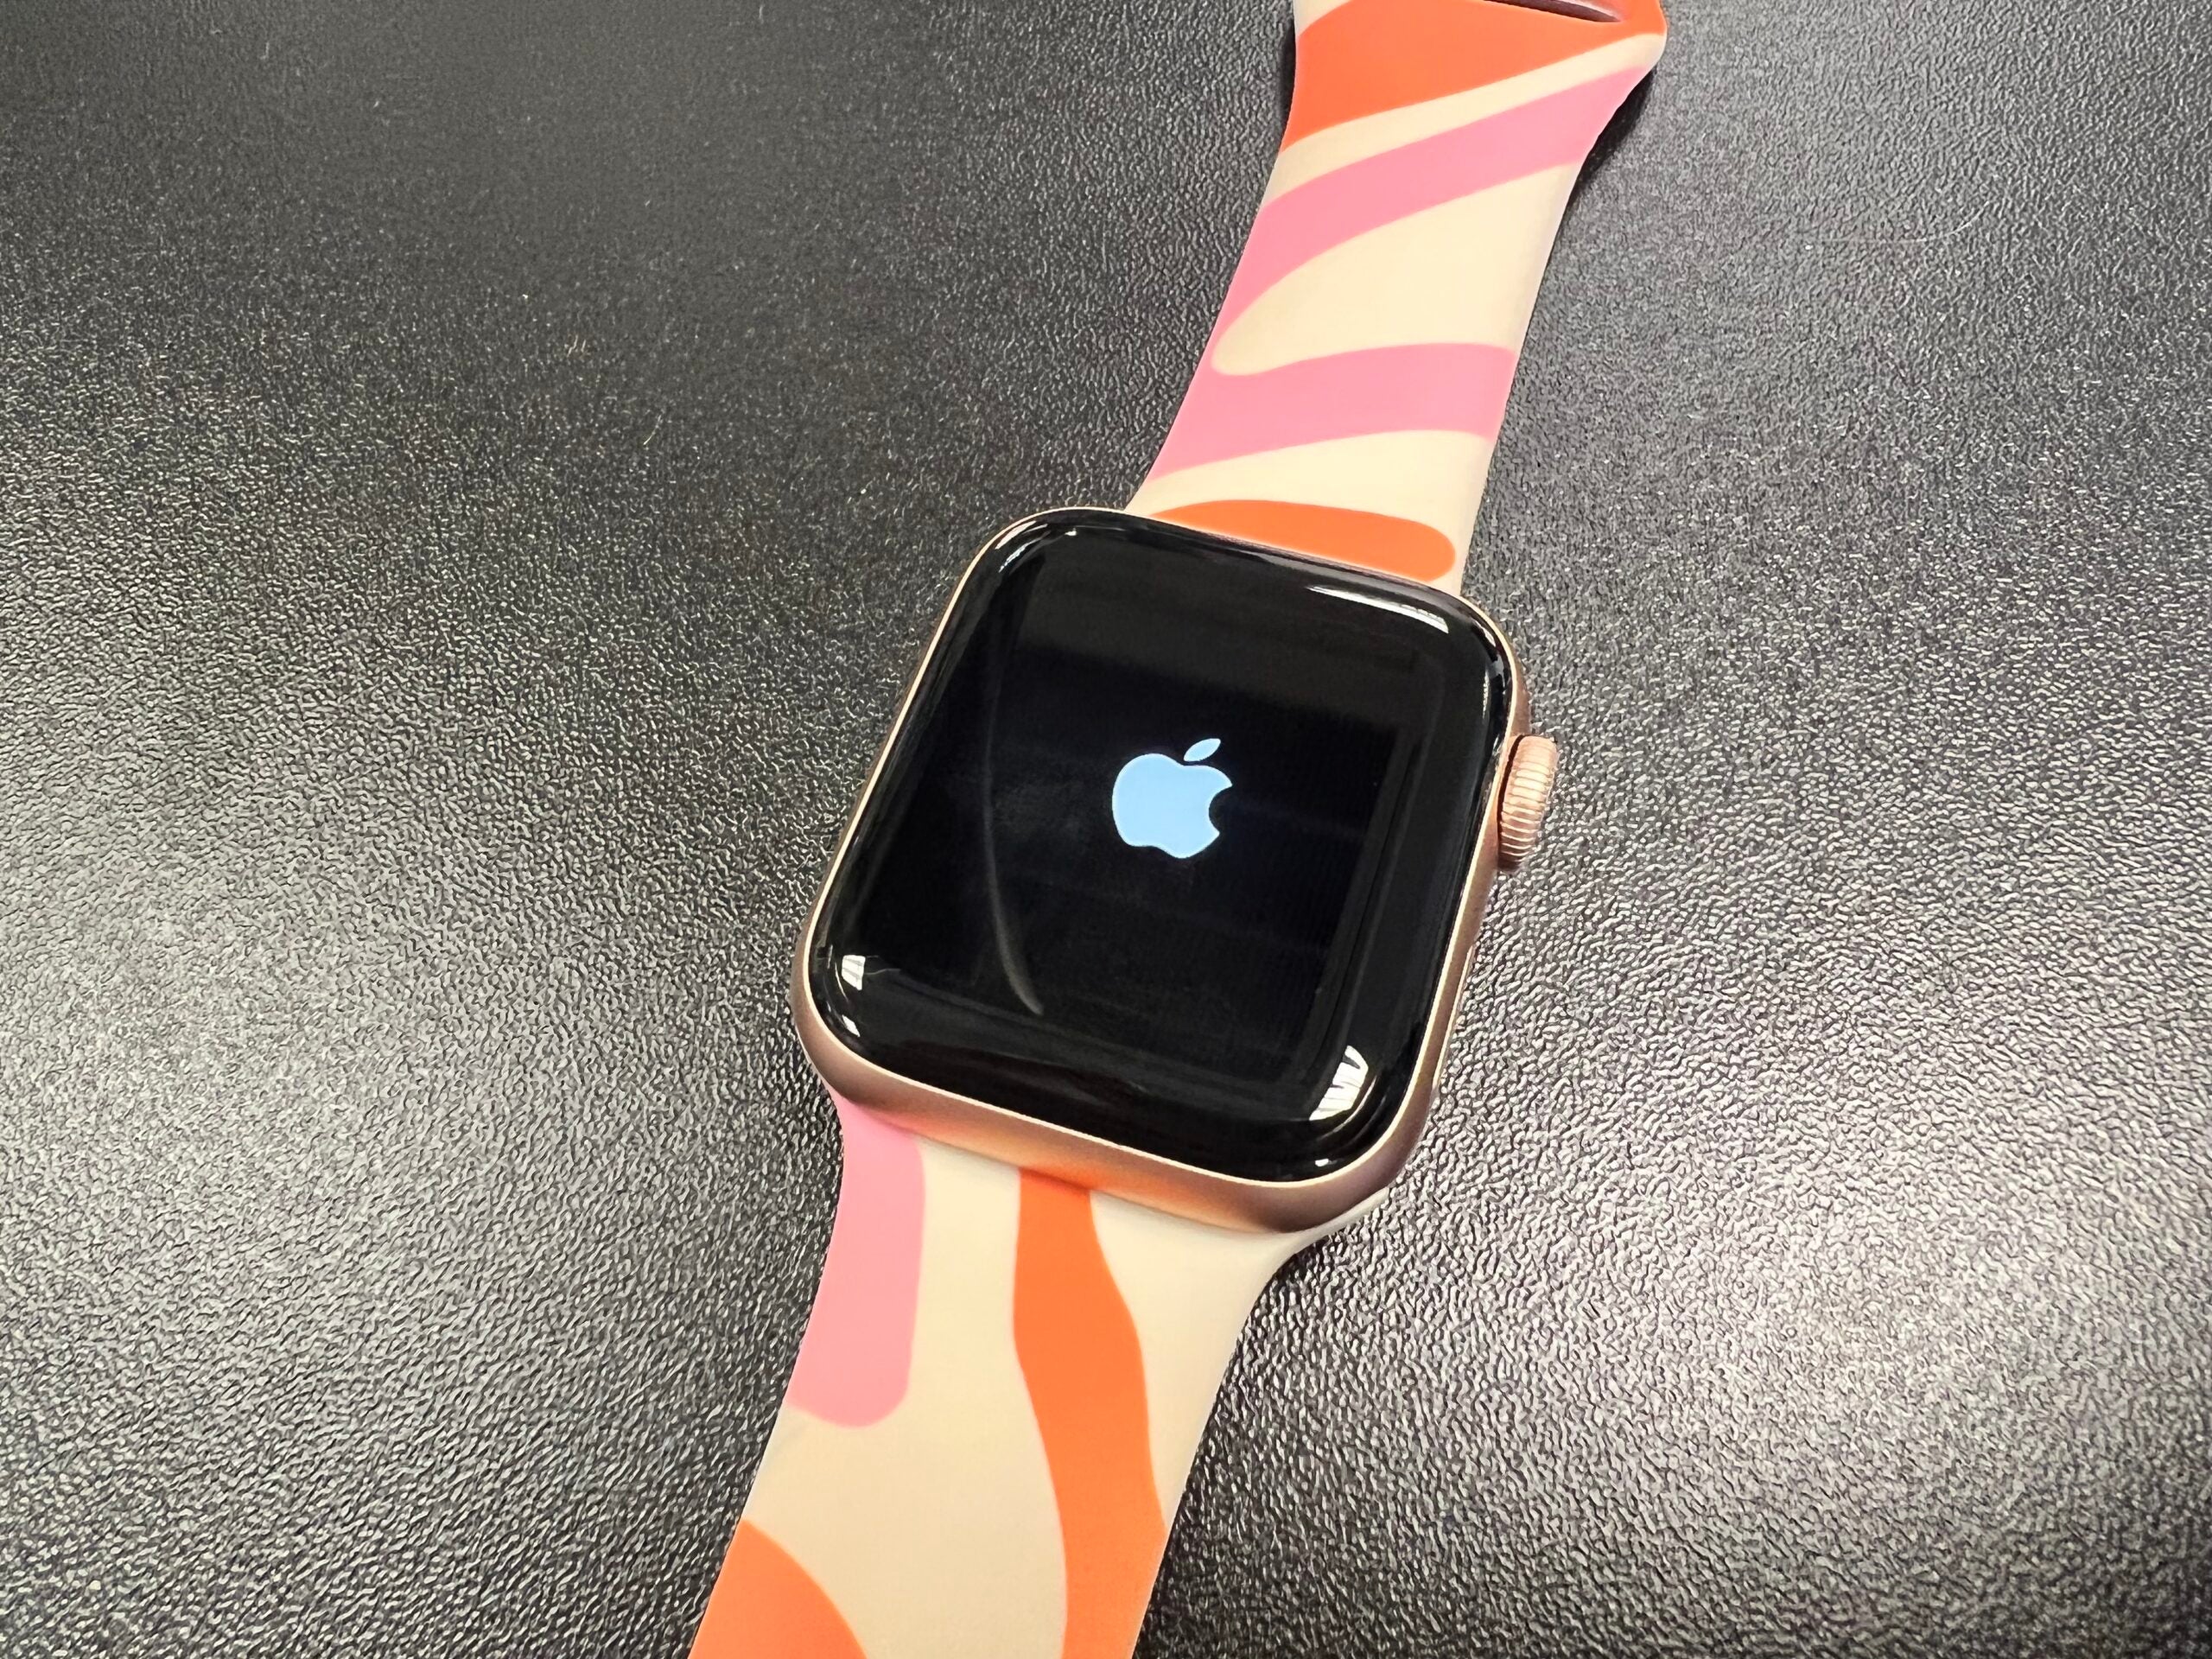 The restart Apple logo screen that appears on Apple Watch 6 after restart